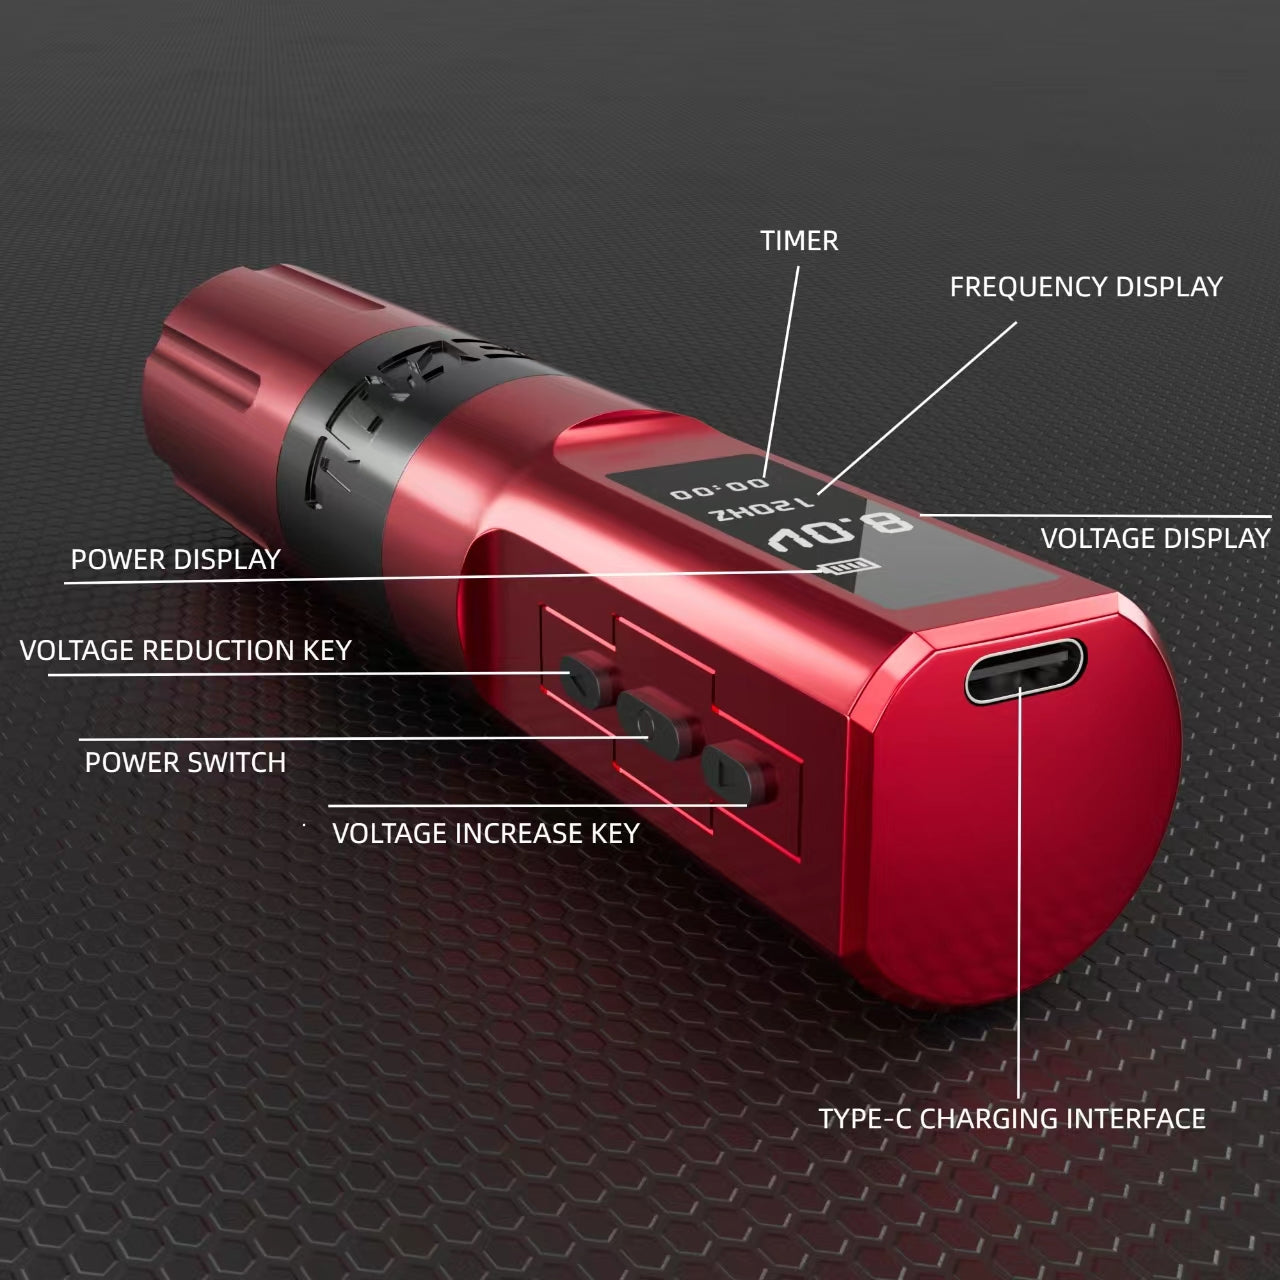 Neebol Wireless Tattoo Gun Kit, 6-Hour Battery Life, Complete Tattoo Machine Package with Everything, Unibody Series